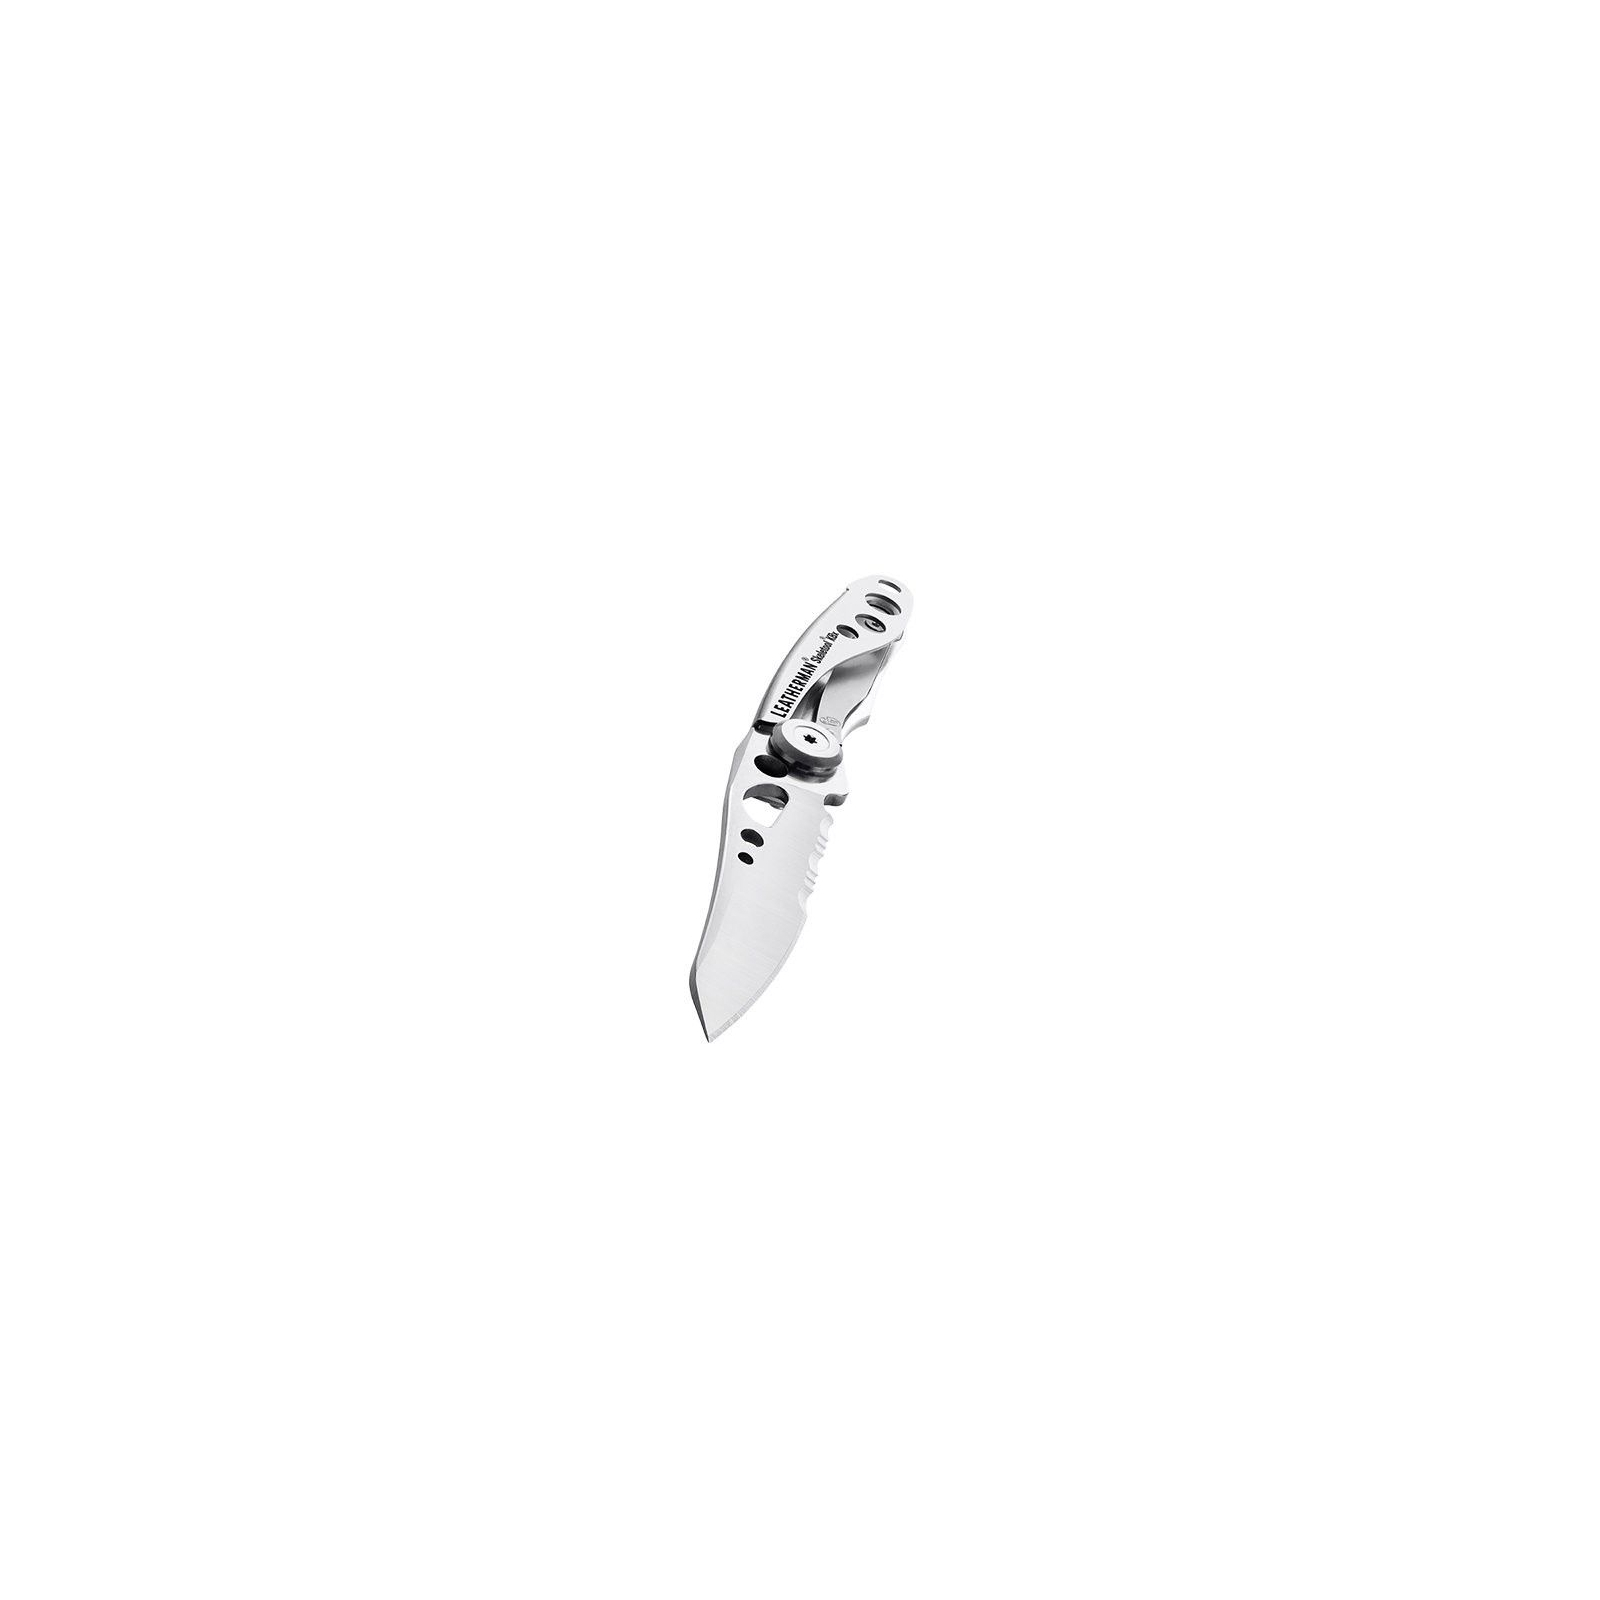 Нож Leatherman Skeletool KBX-Stainless коробка (832382) изображение 2